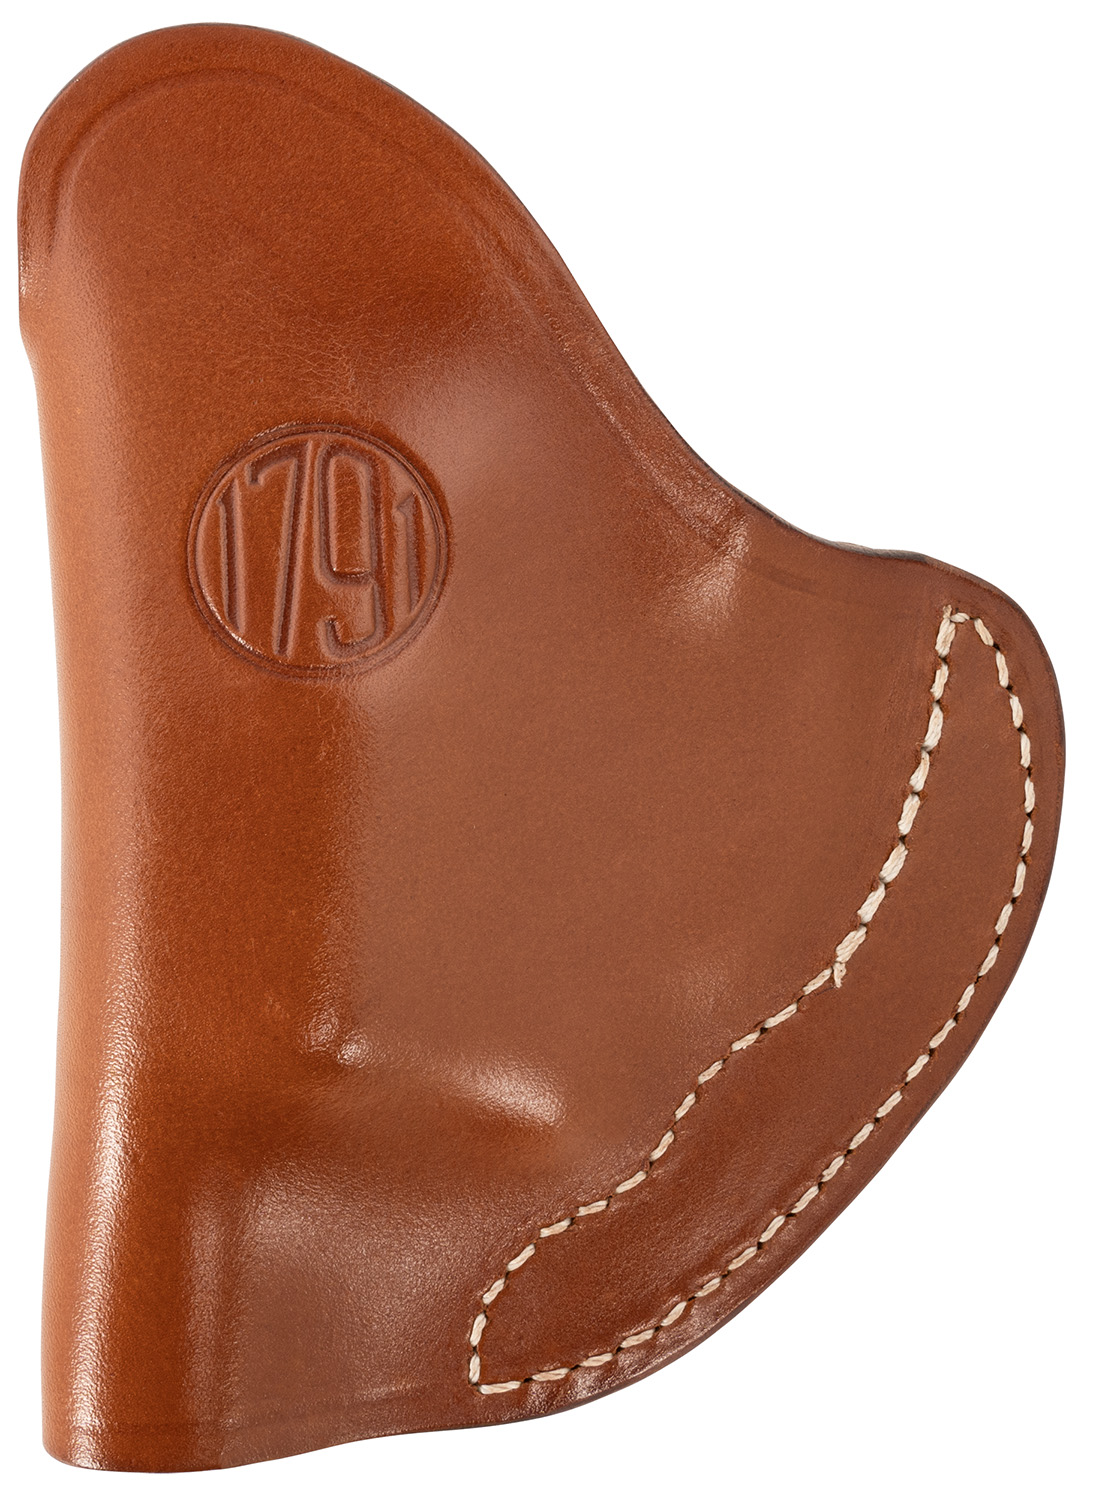 1791 Gunleather RVHIWB1TCBRR RVH  IWB Size 01 Classic Brown Leather Belt Clip Right Hand